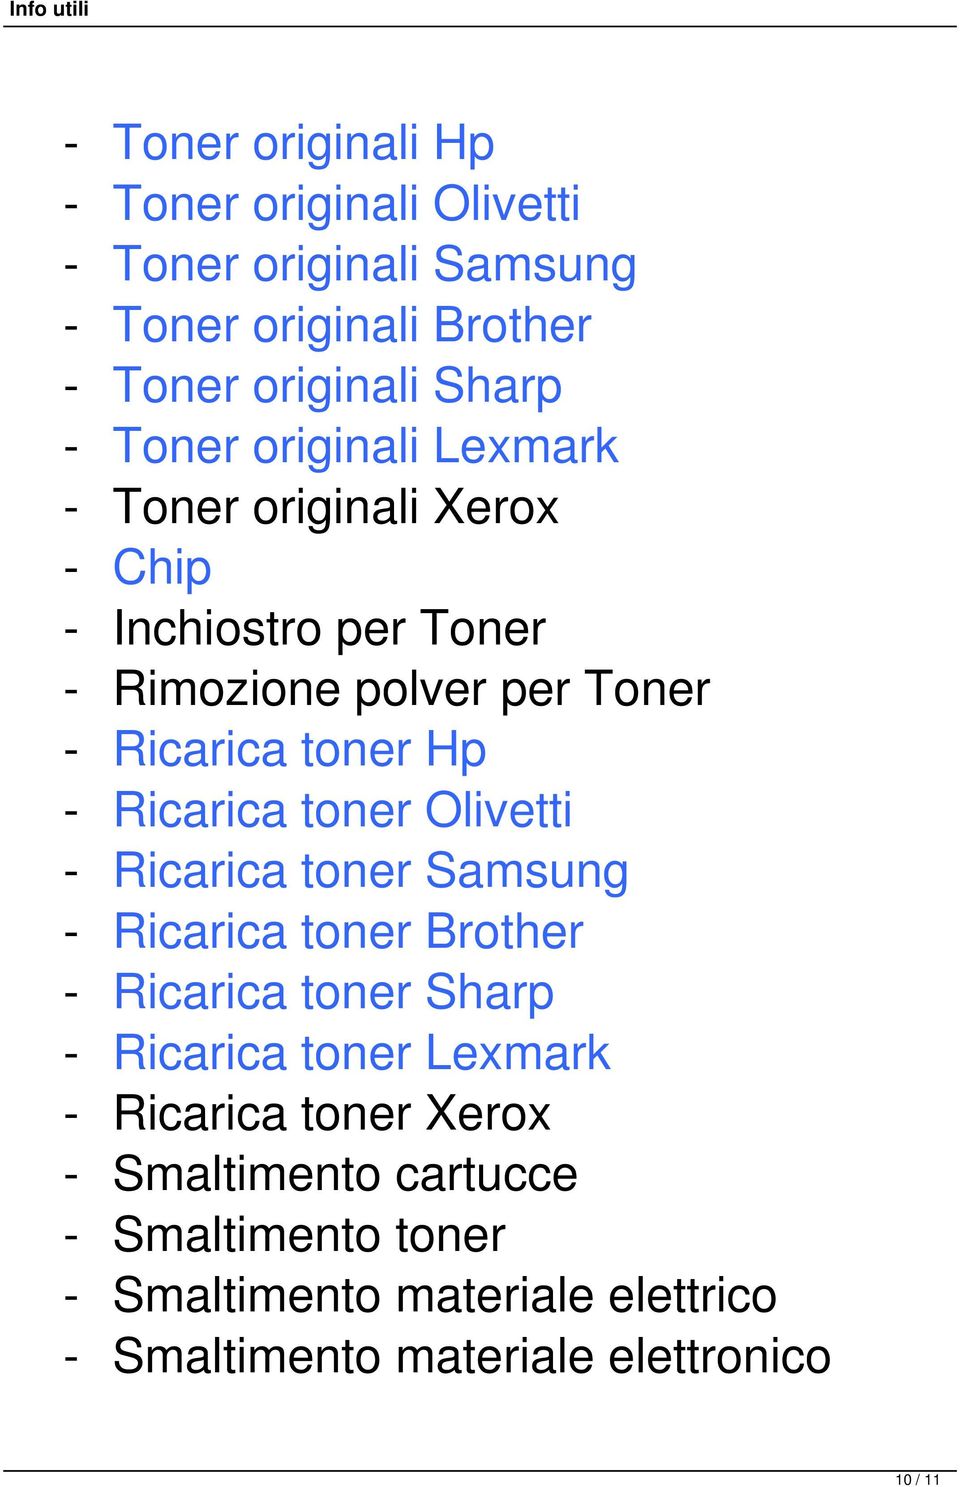 Ricarica toner Olivetti - Ricarica toner Samsung - Ricarica toner Brother - Ricarica toner Sharp - Ricarica toner Lexmark -